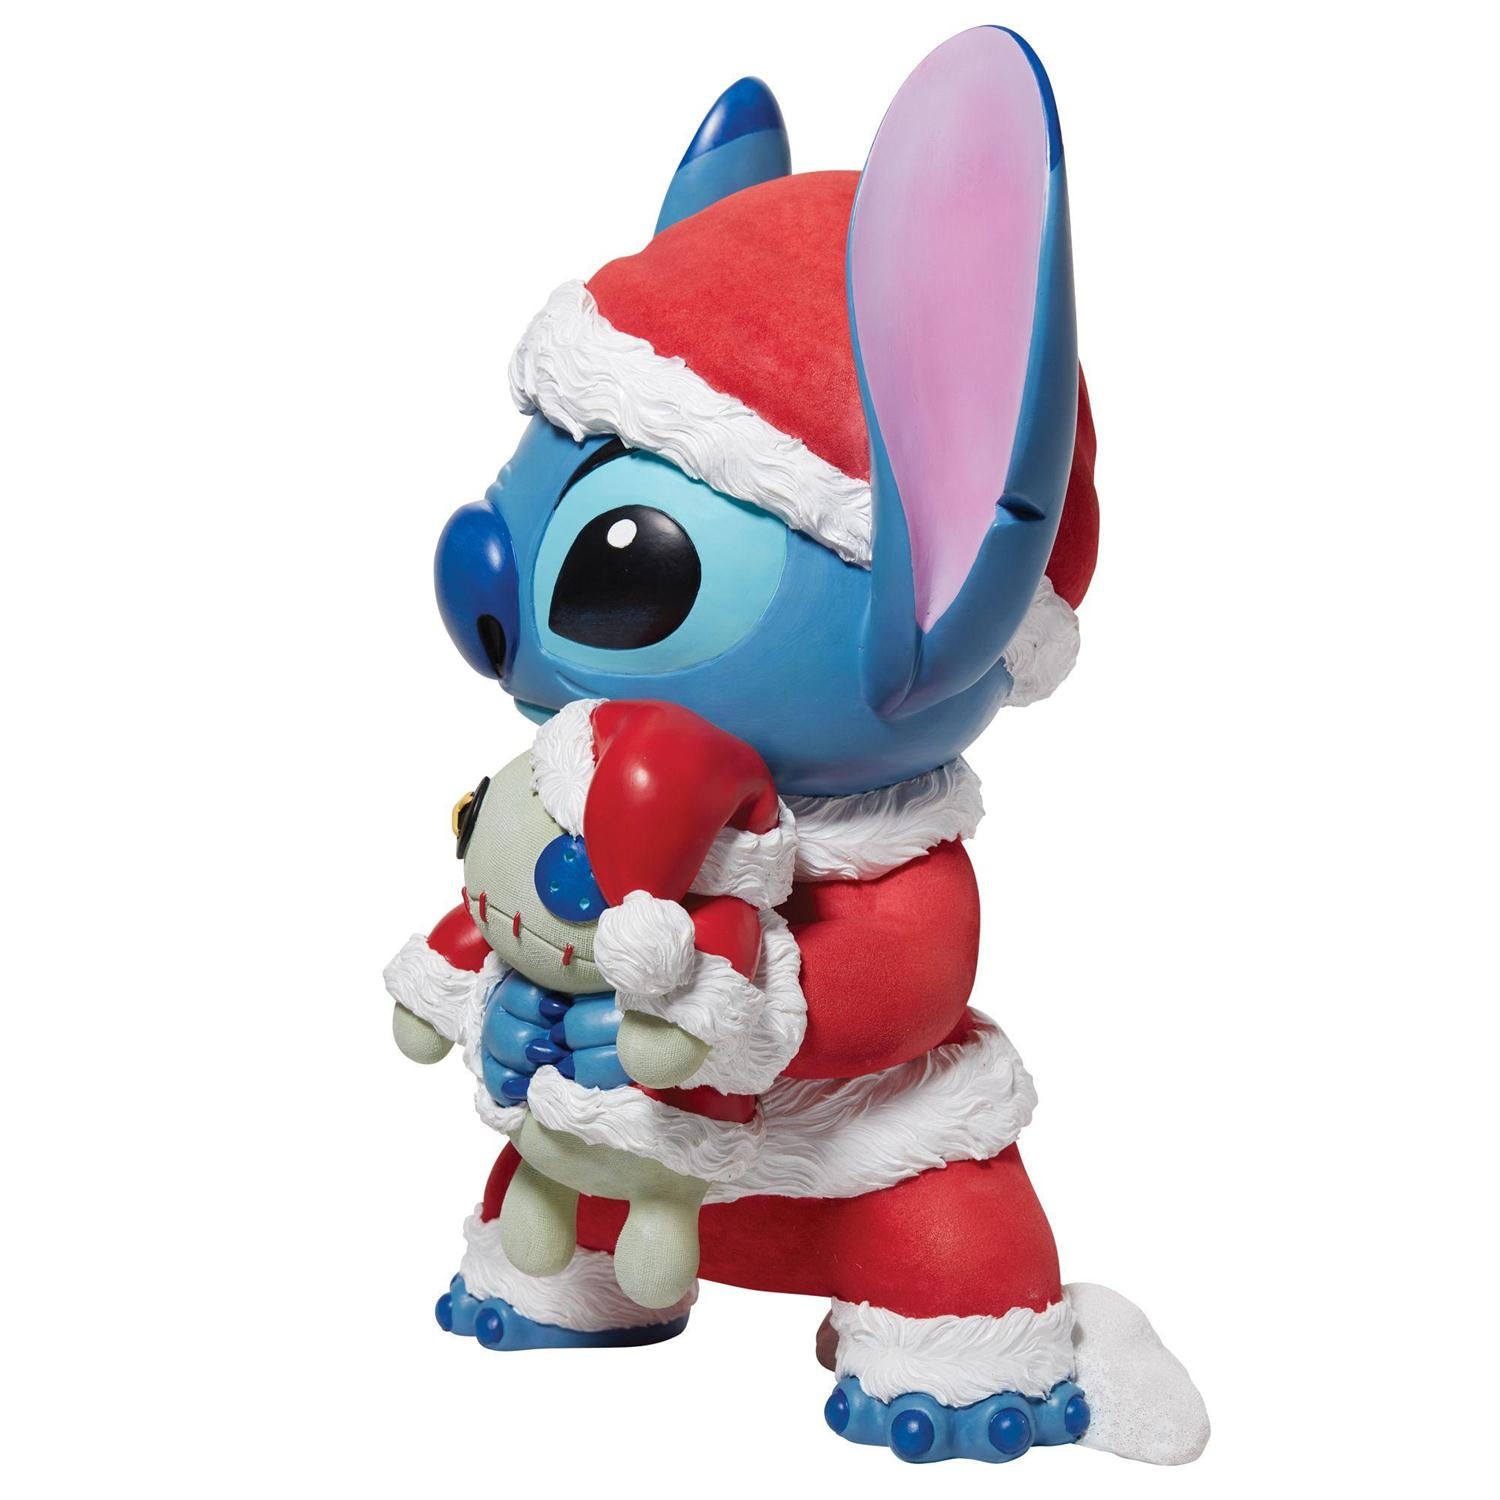  Stitch as Santa holding Lilo's ugly doll. - Side